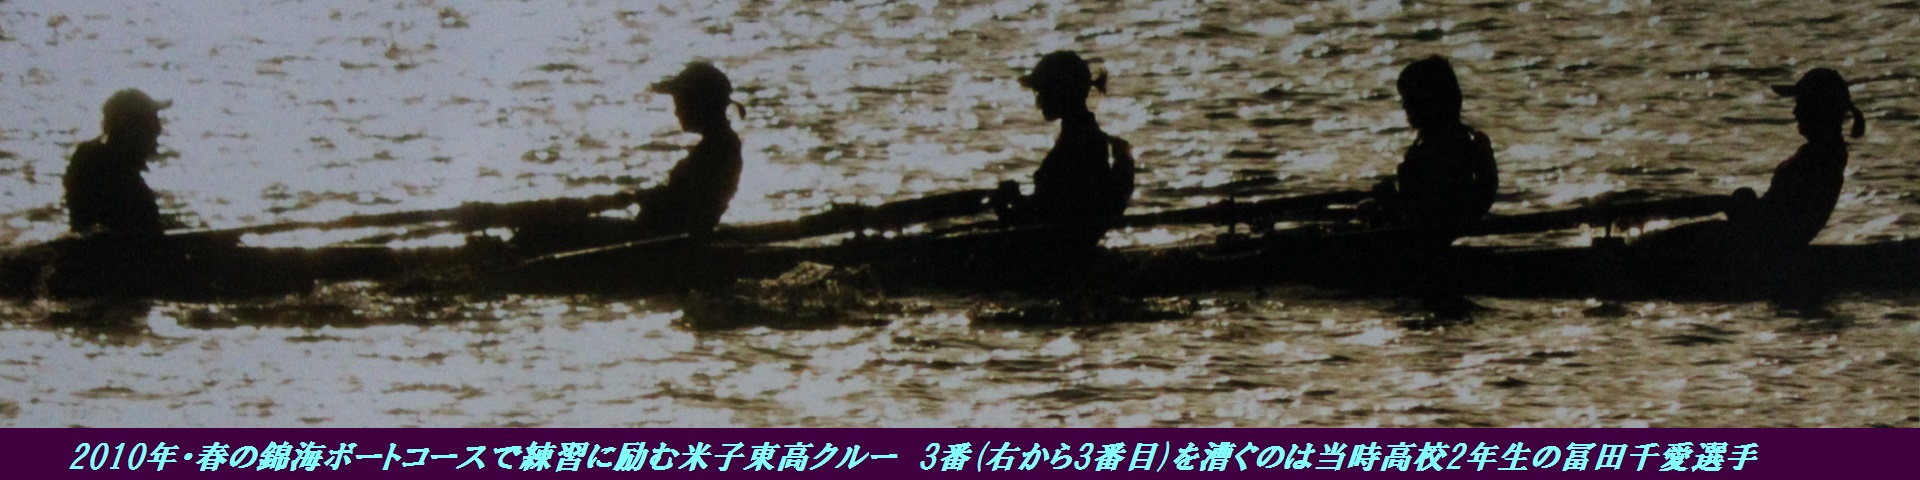 Tottori Rowing Association